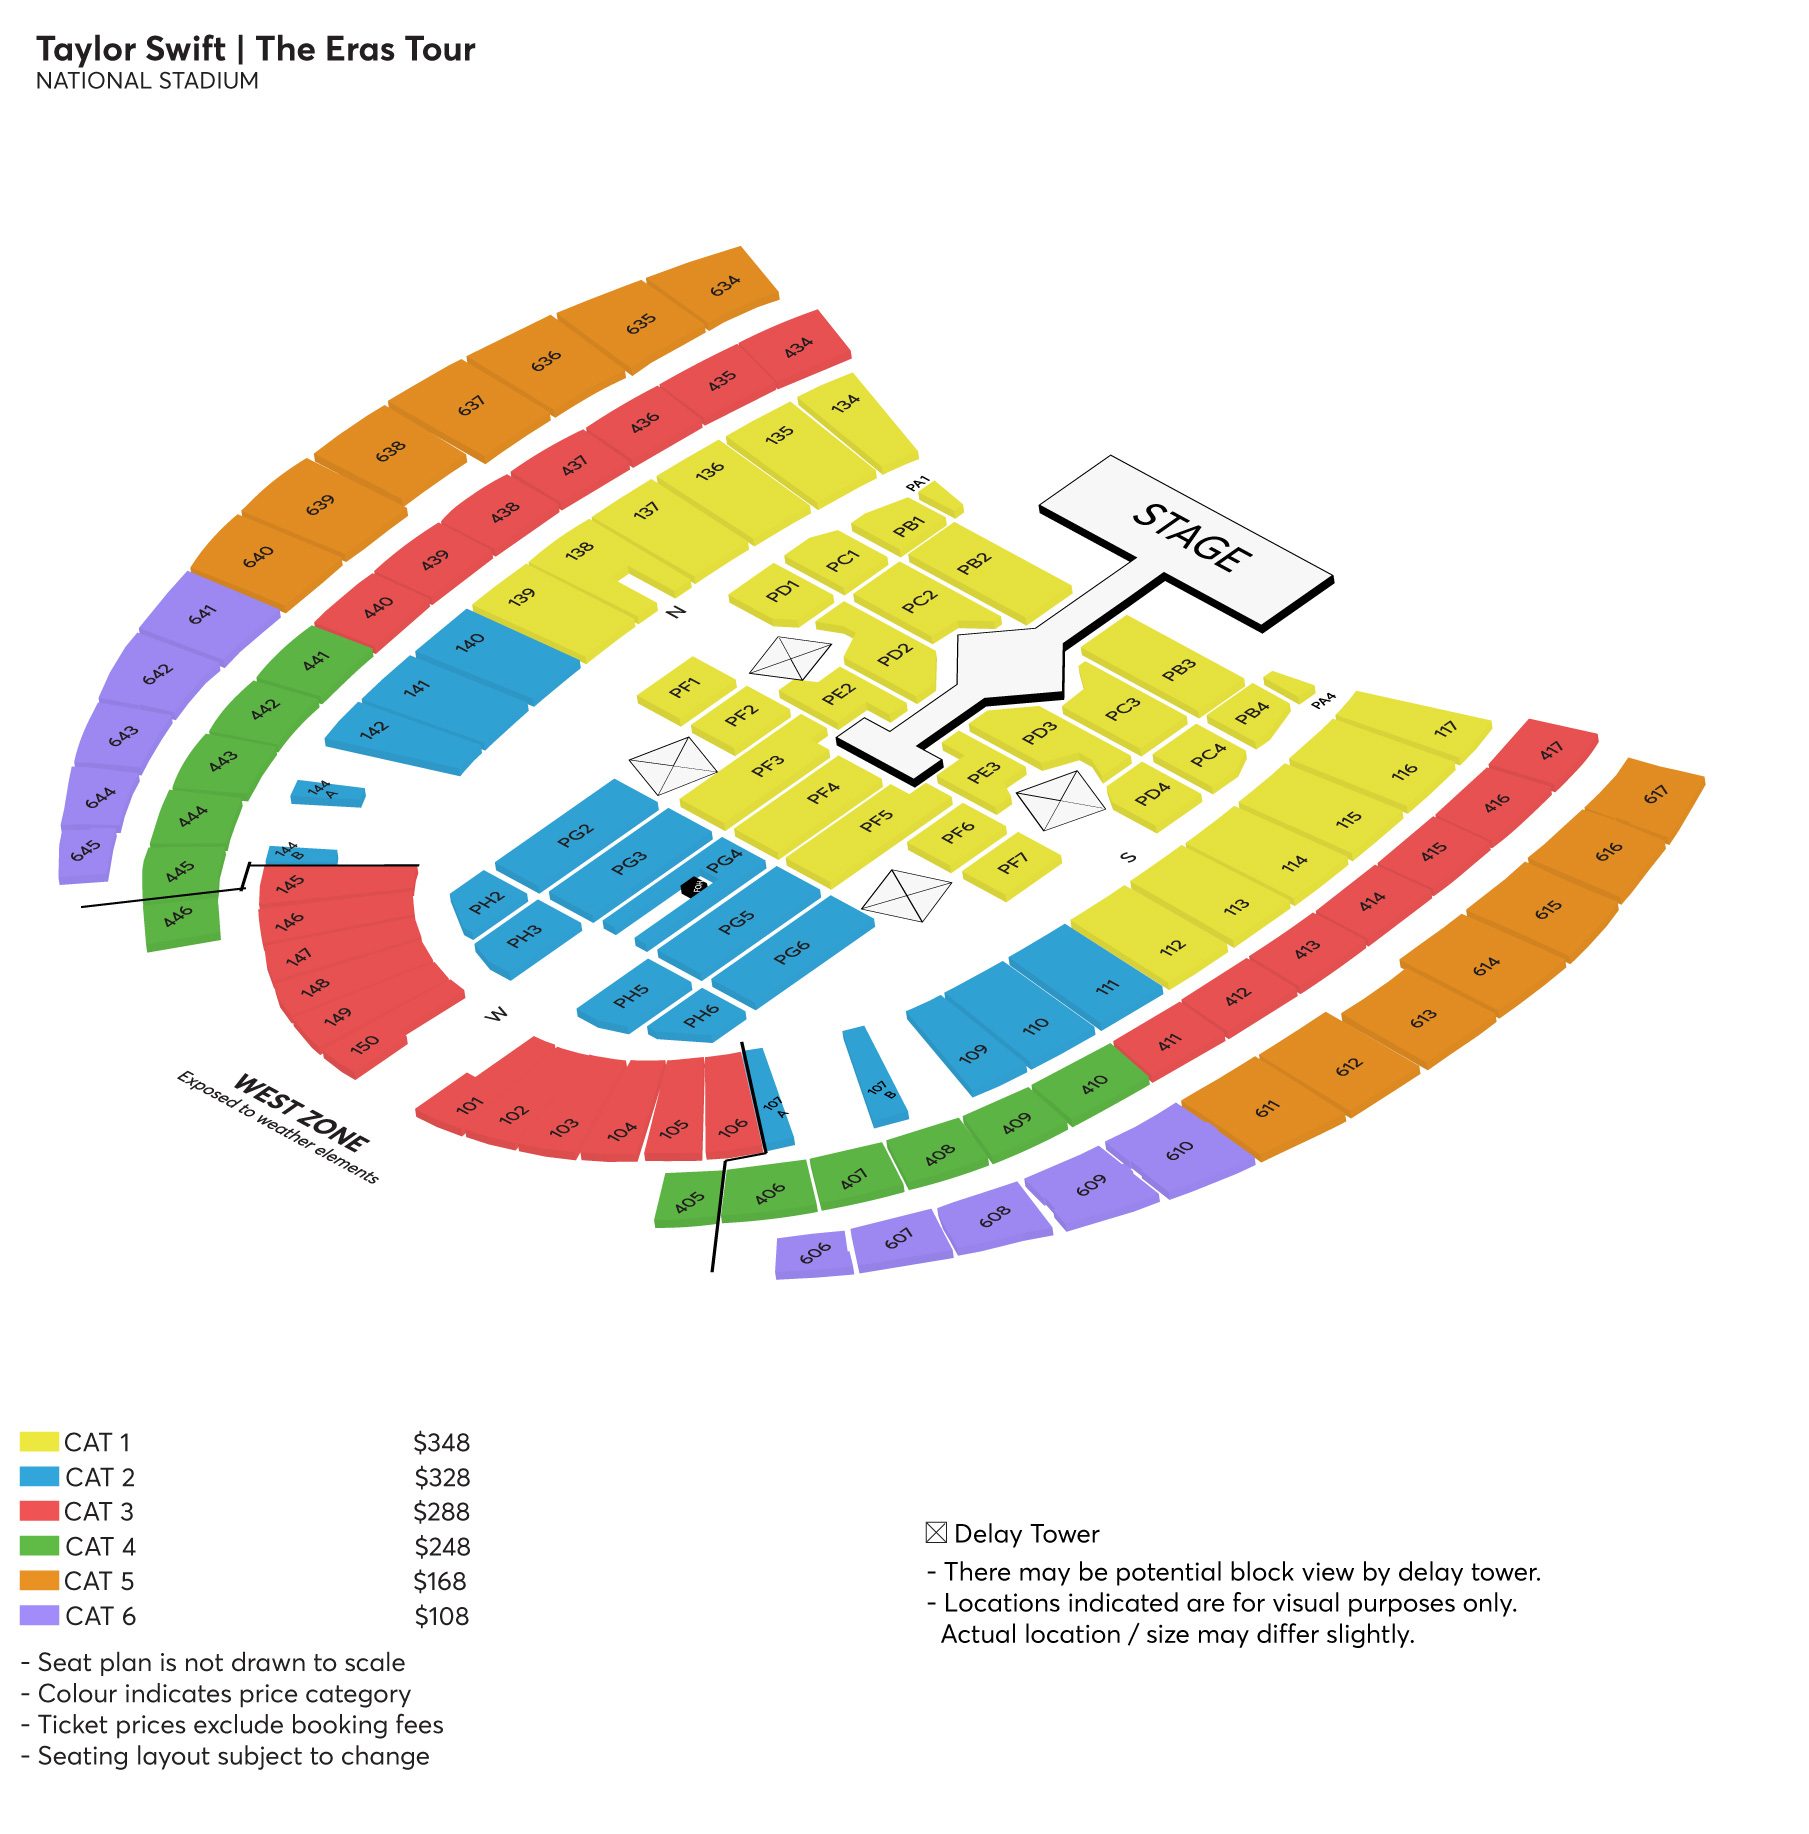 Ticket prices, seat plan: Taylor Swift’s ‘The Eras Tour’ in Singapore